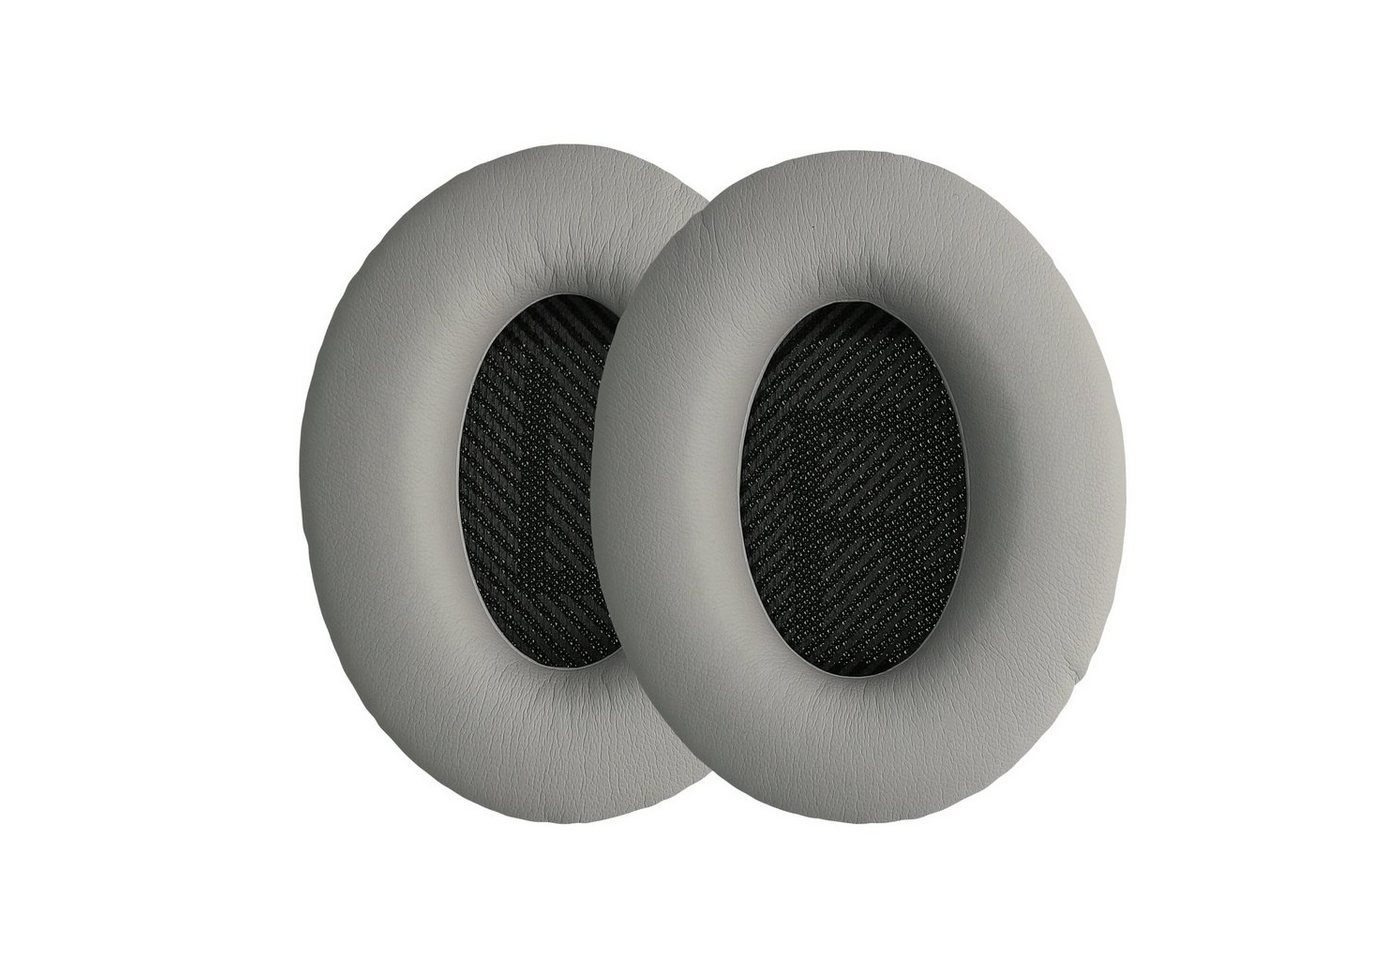 kwmobile 2x Ohr Polster für Bose Soundlink Around-Ear Wireless II Ohrpolster (Ohrpolster Kopfhörer - Kunstleder Polster für Over Ear Headphones) von kwmobile